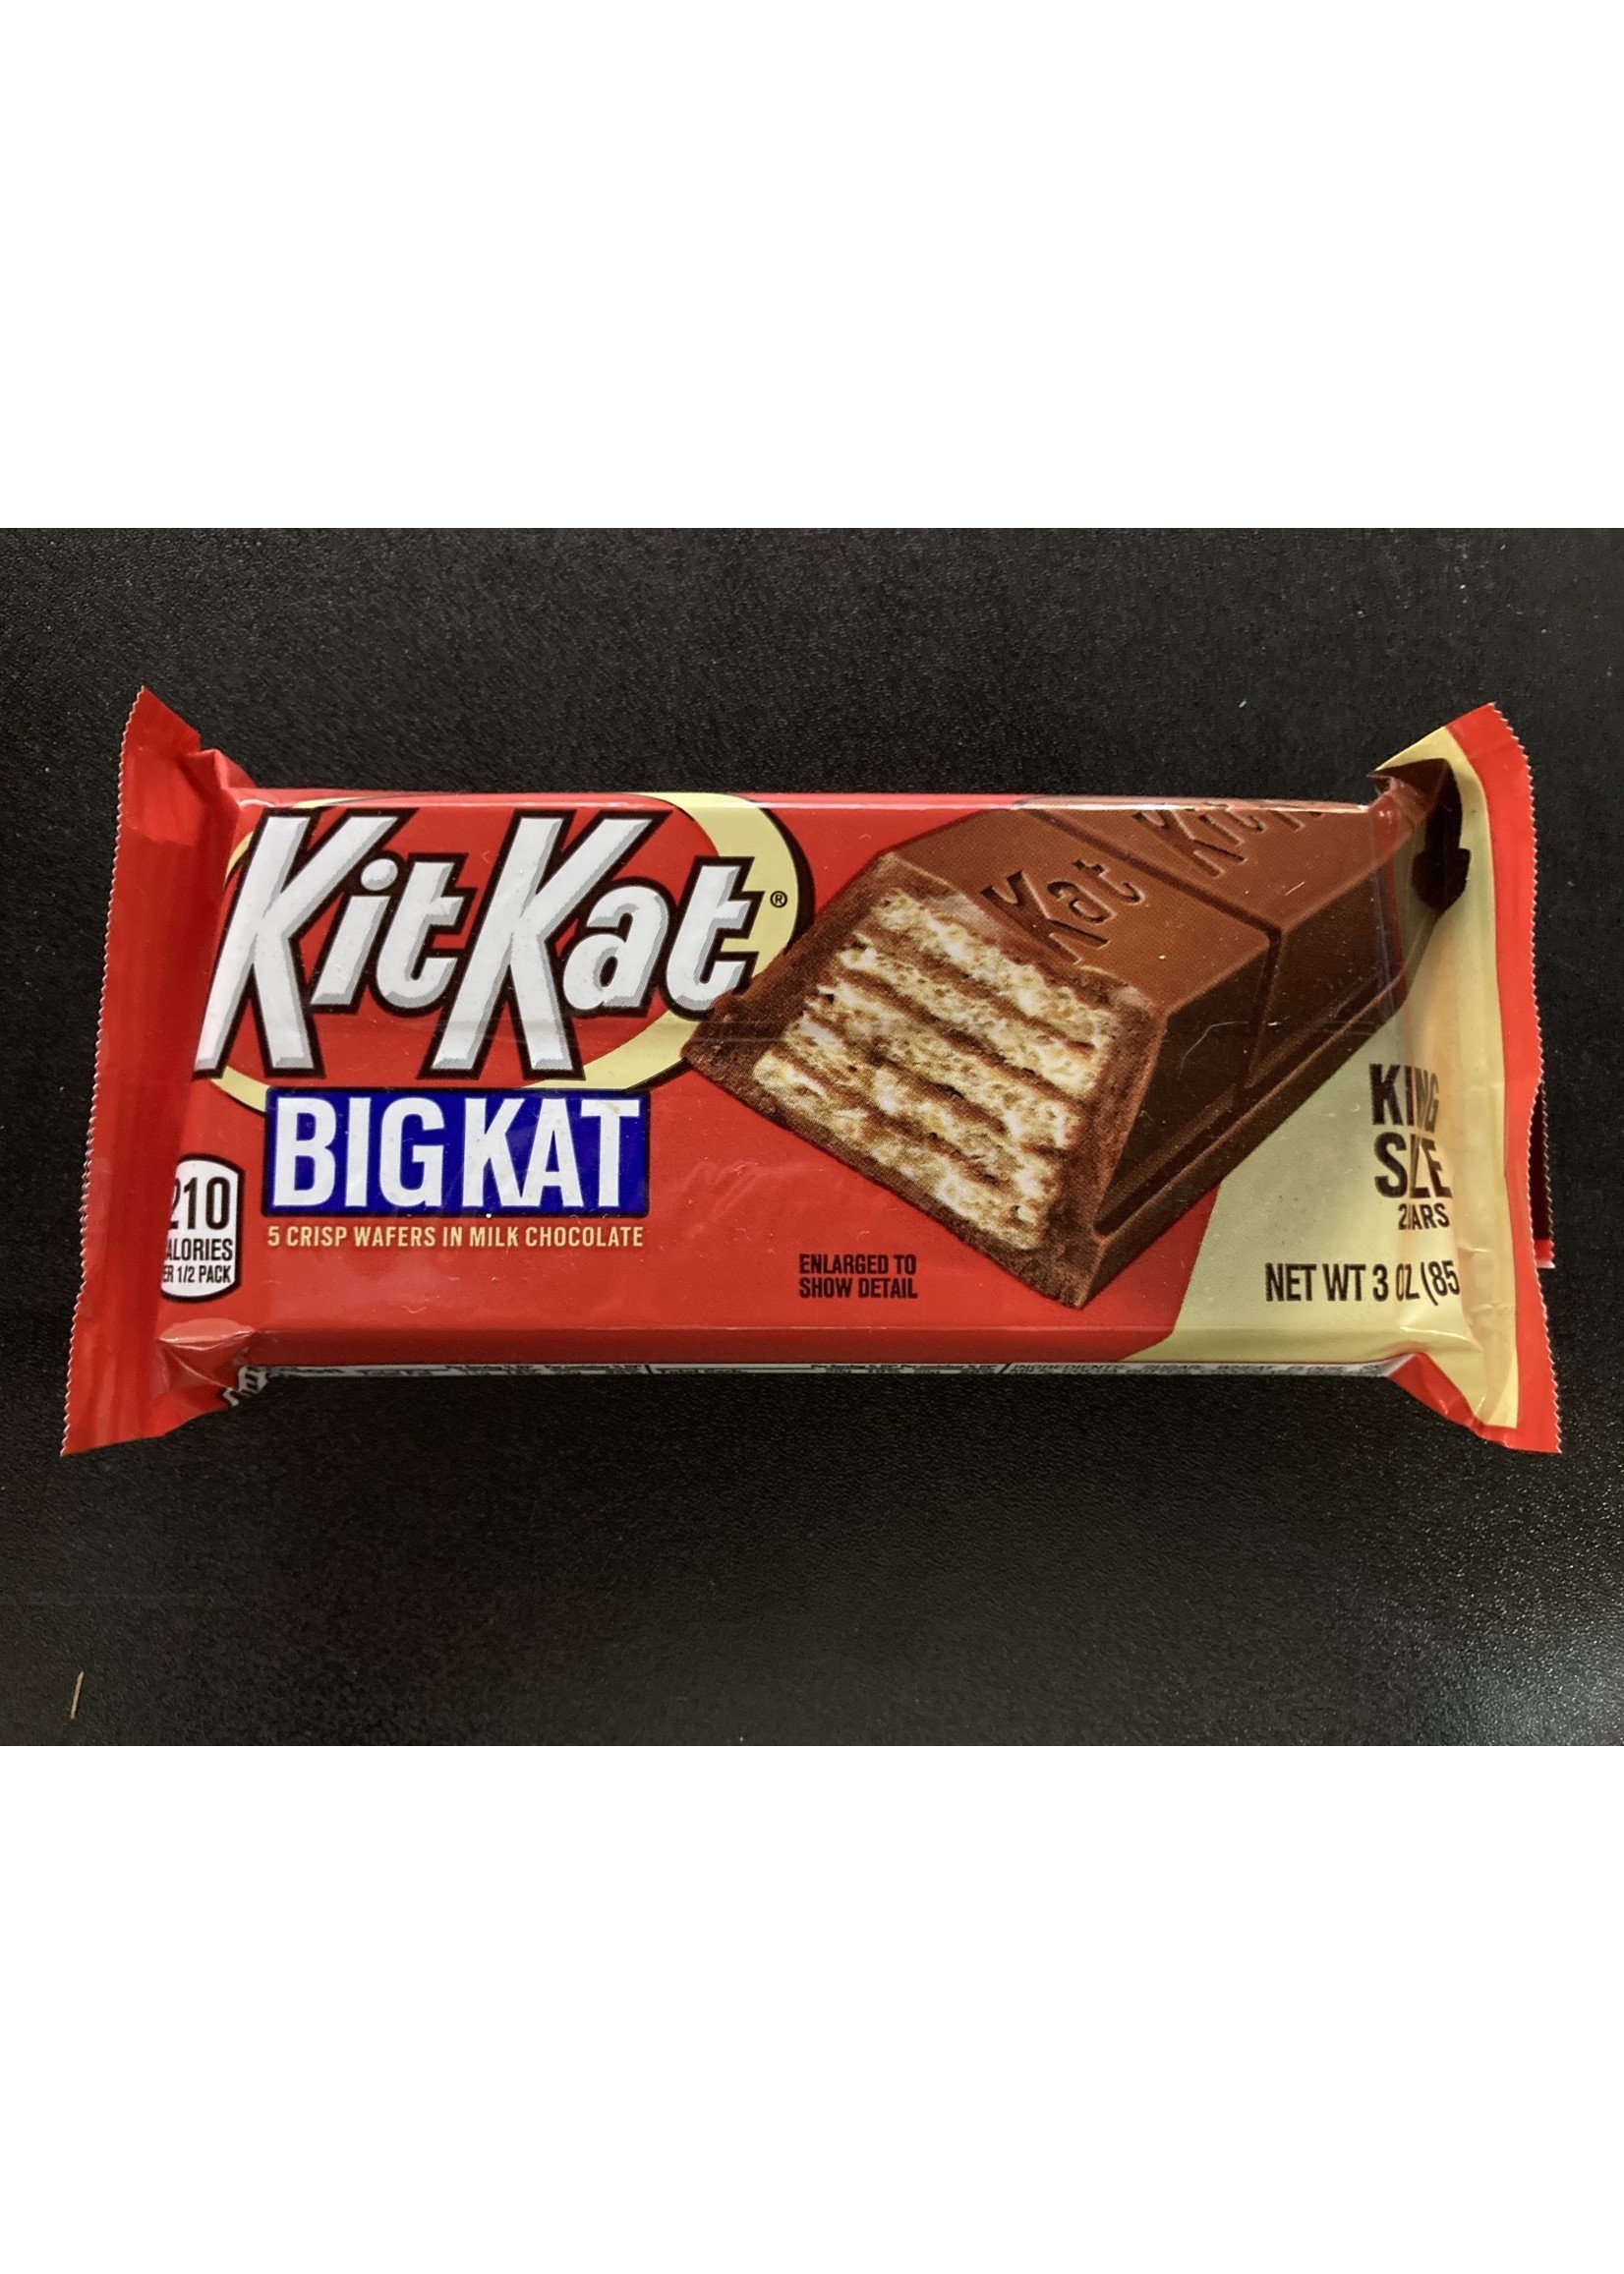 Kit Kat Original King Size 3oz bar